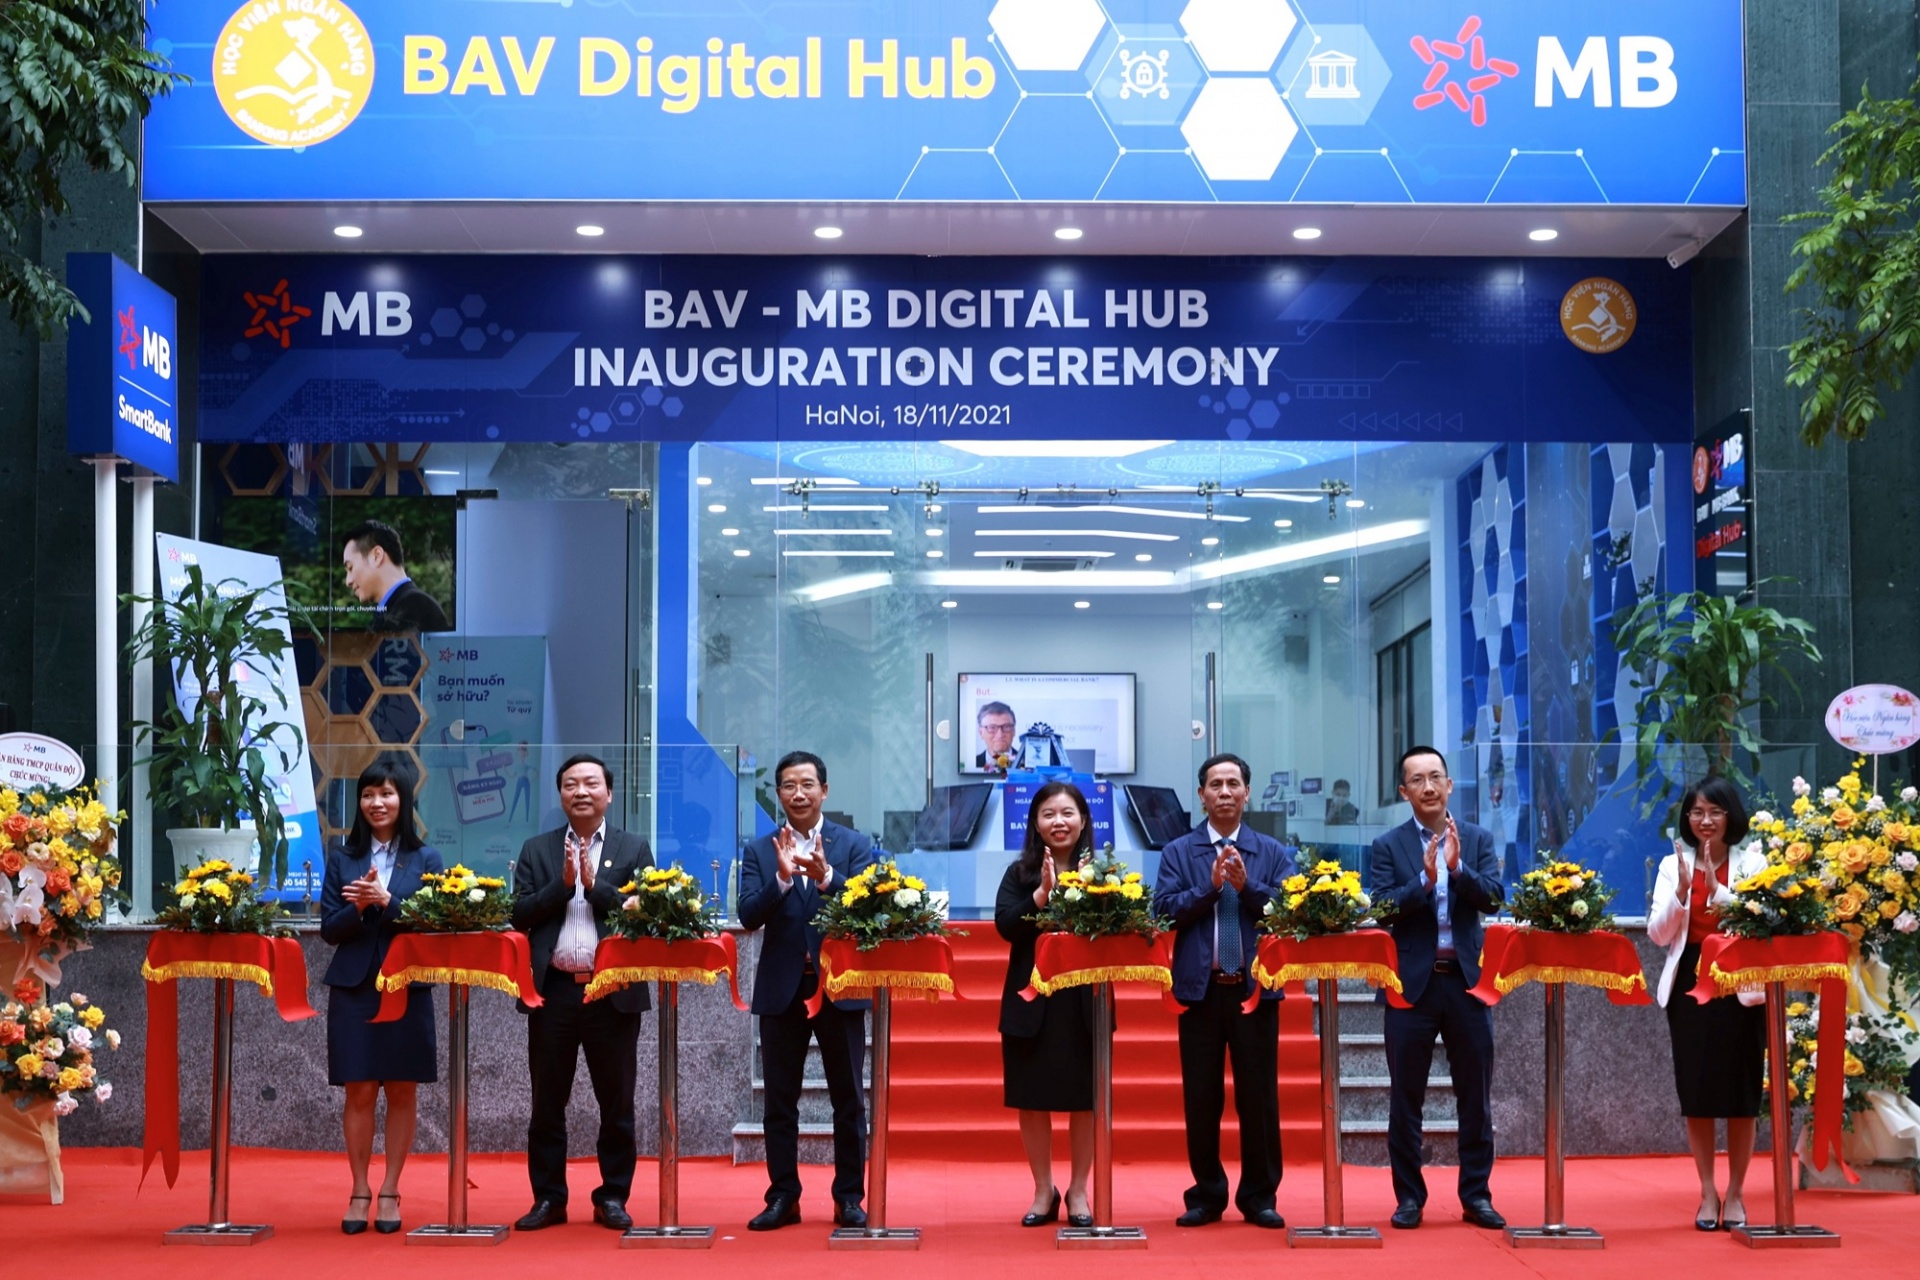 BAV - MB Digital Hub: Top-notch digital banking experience for Banking Academy students